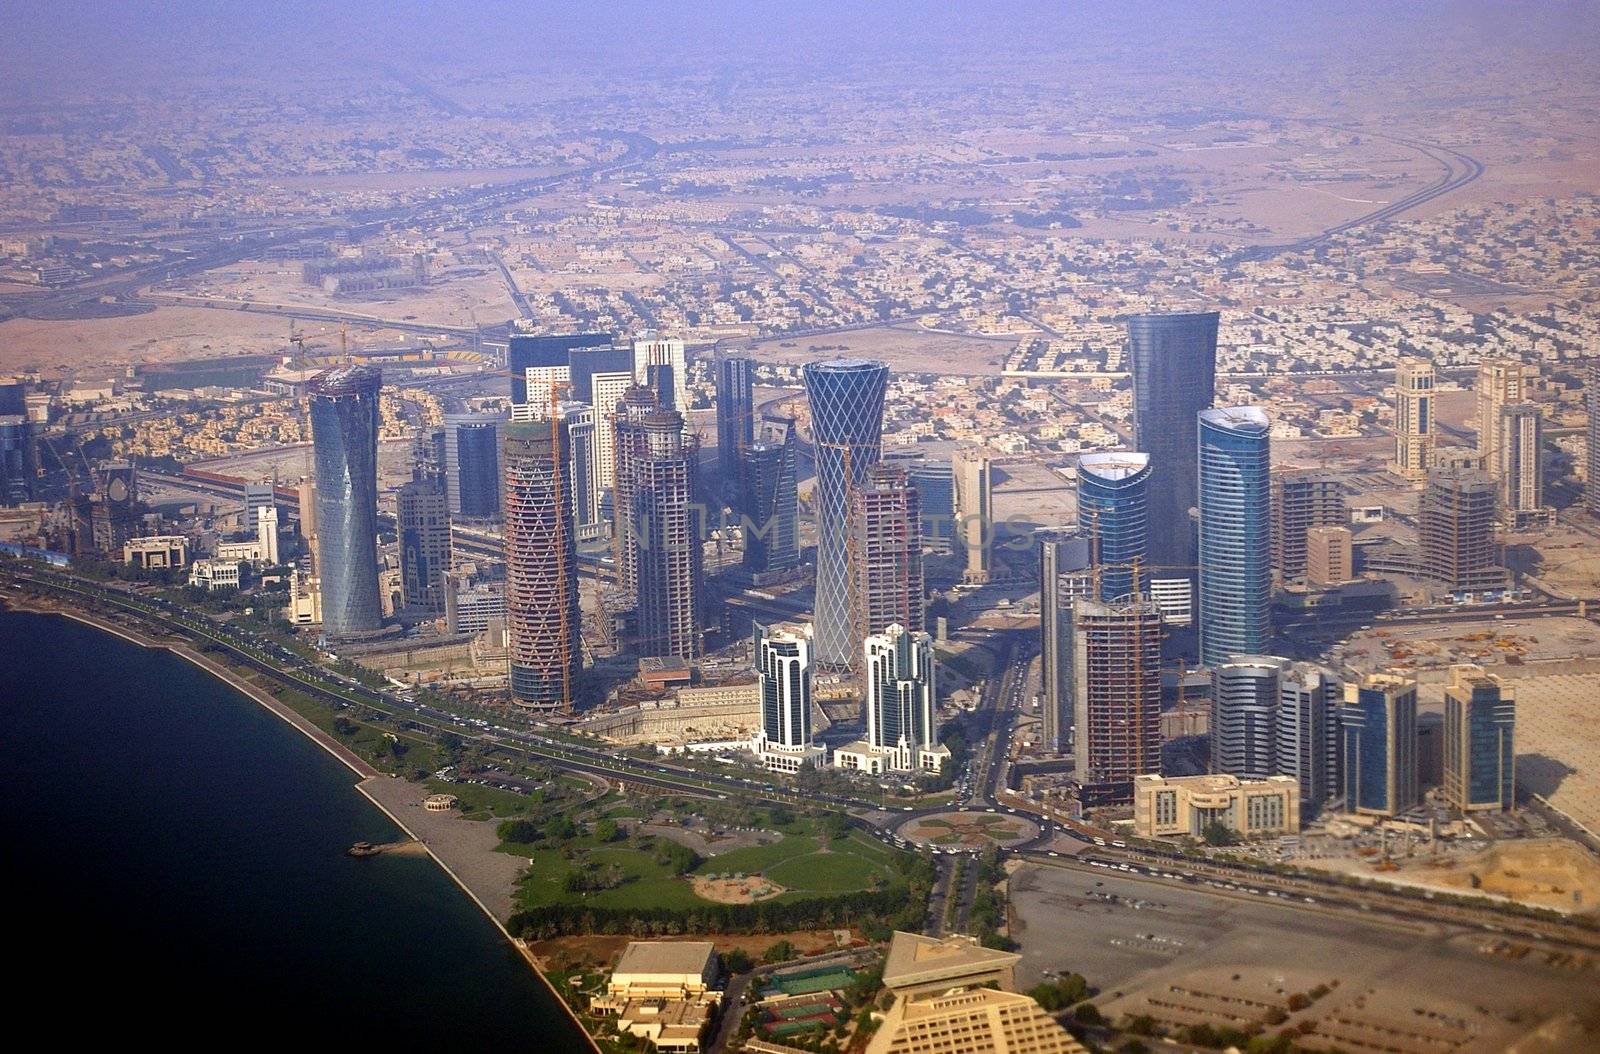 Business district, Doha, Qatar by Komar